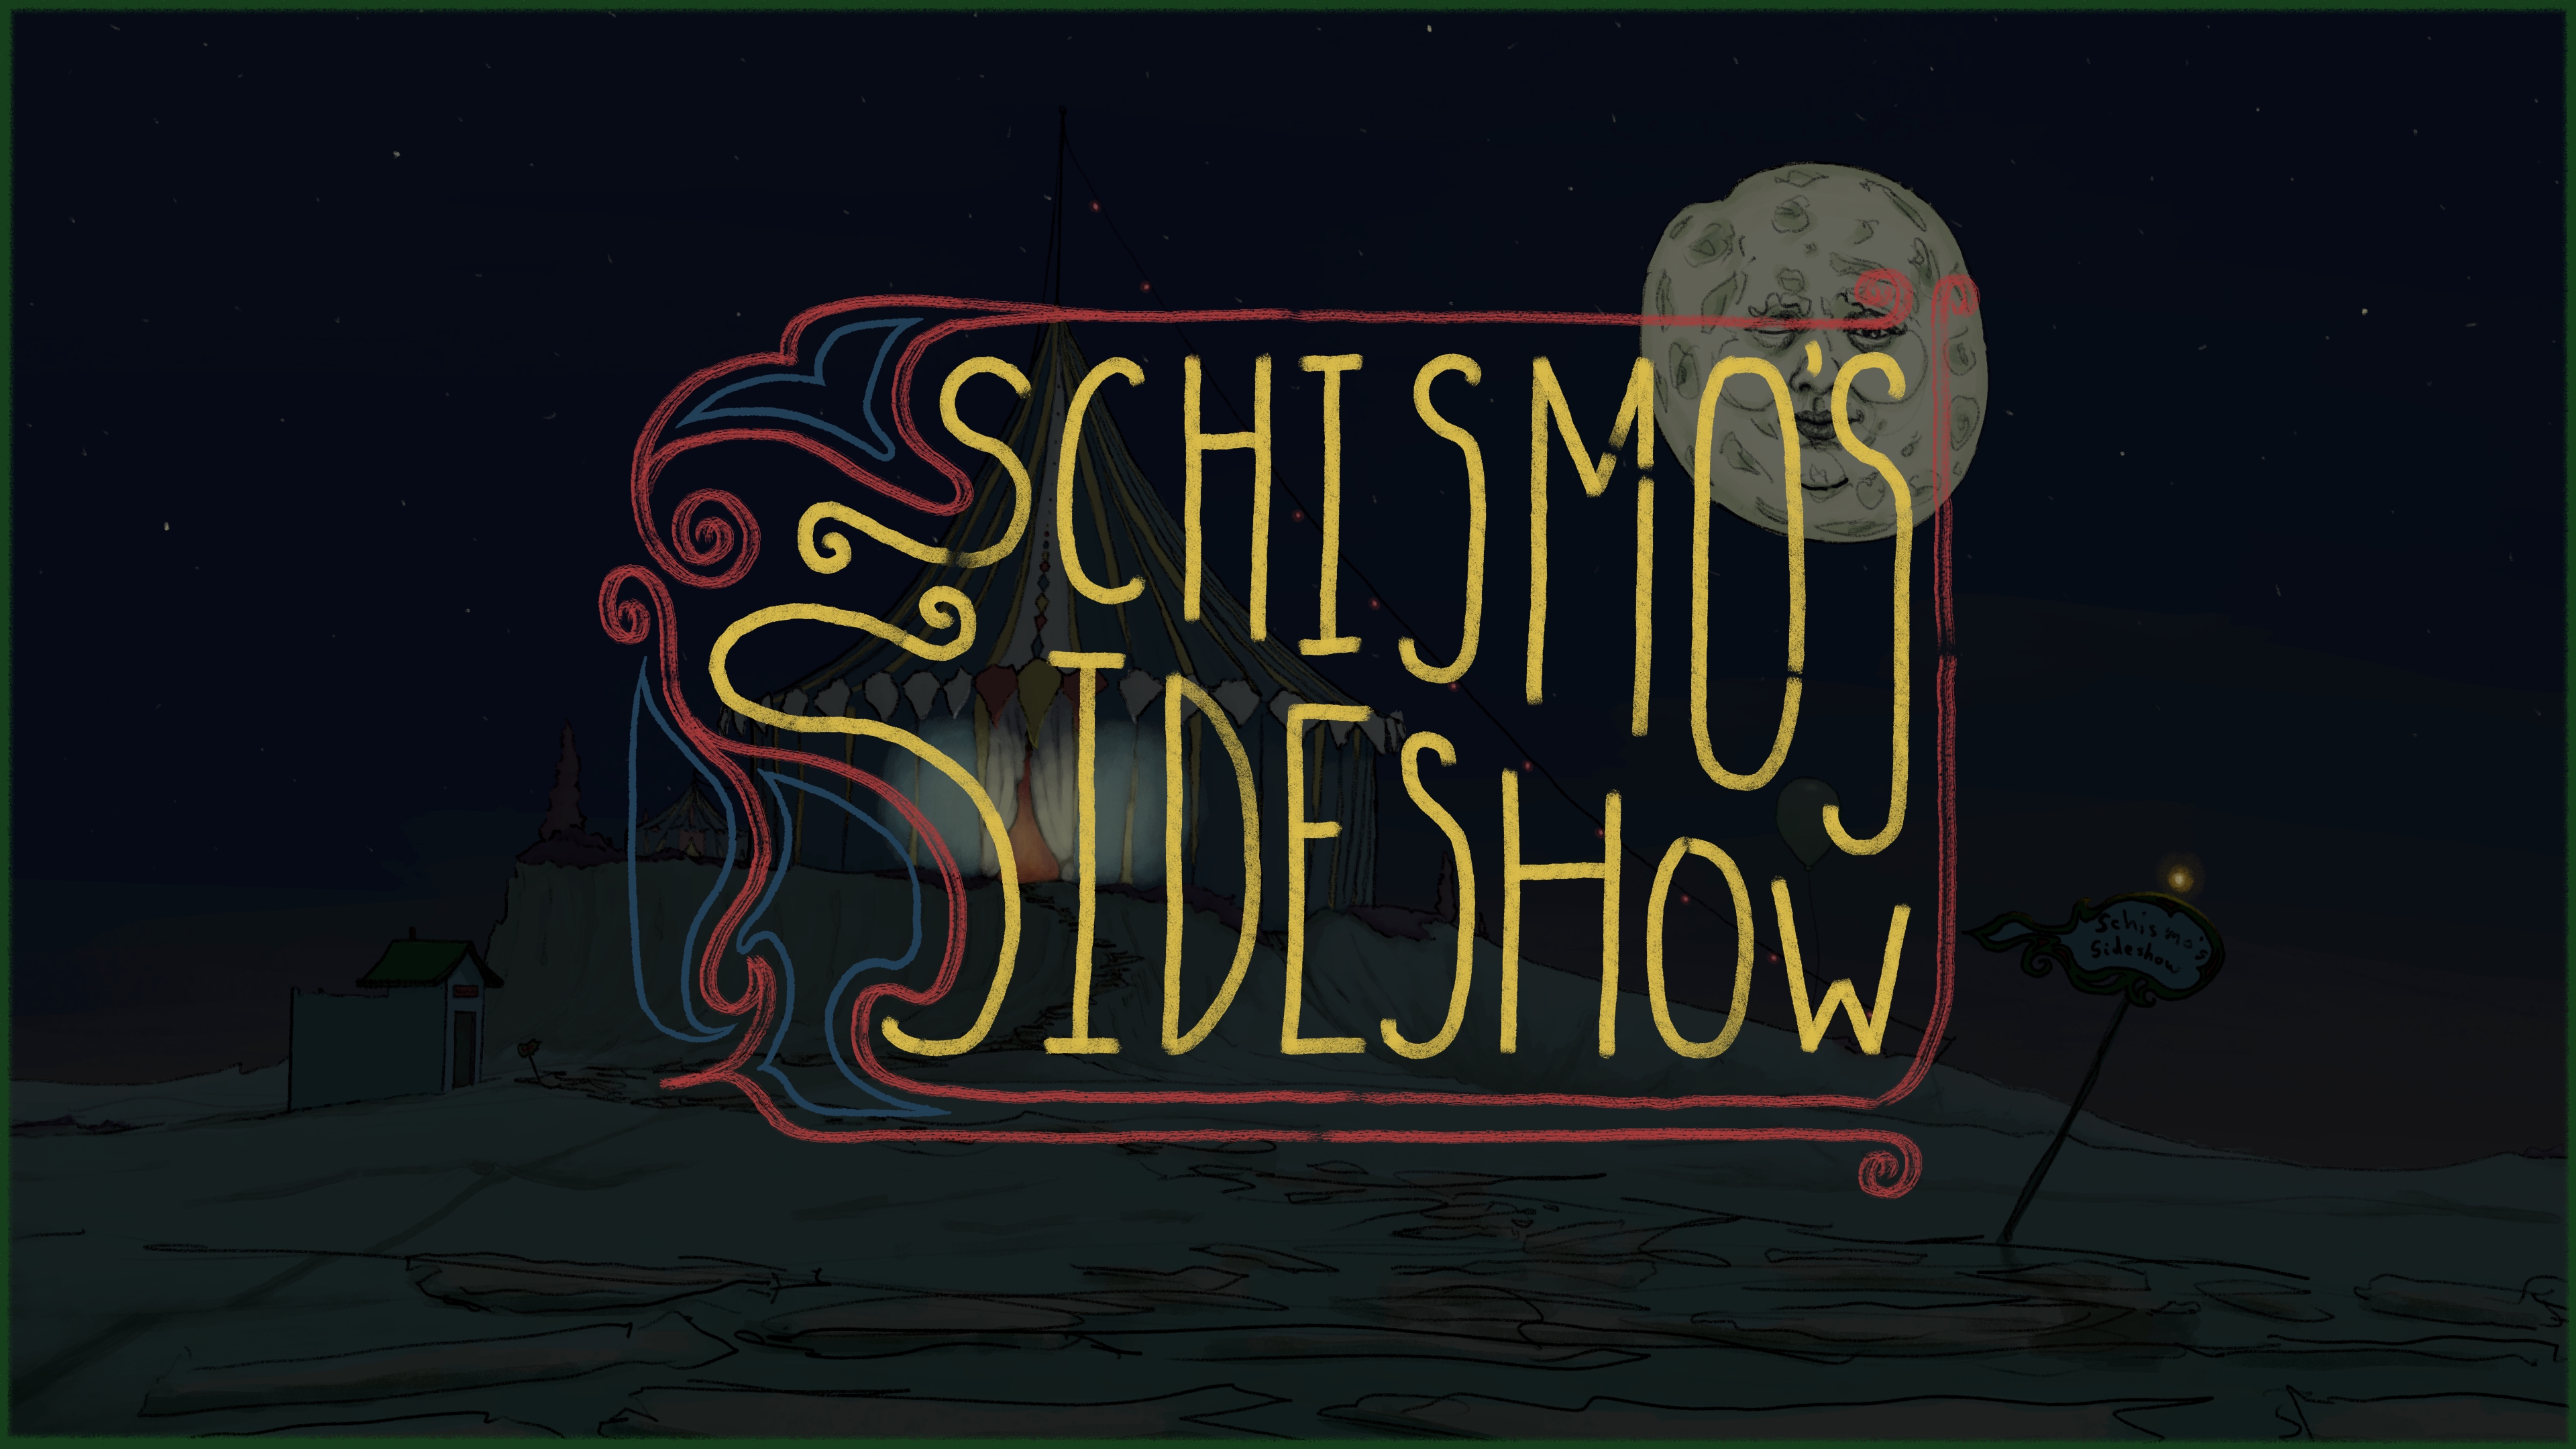 Schismo's Sideshow